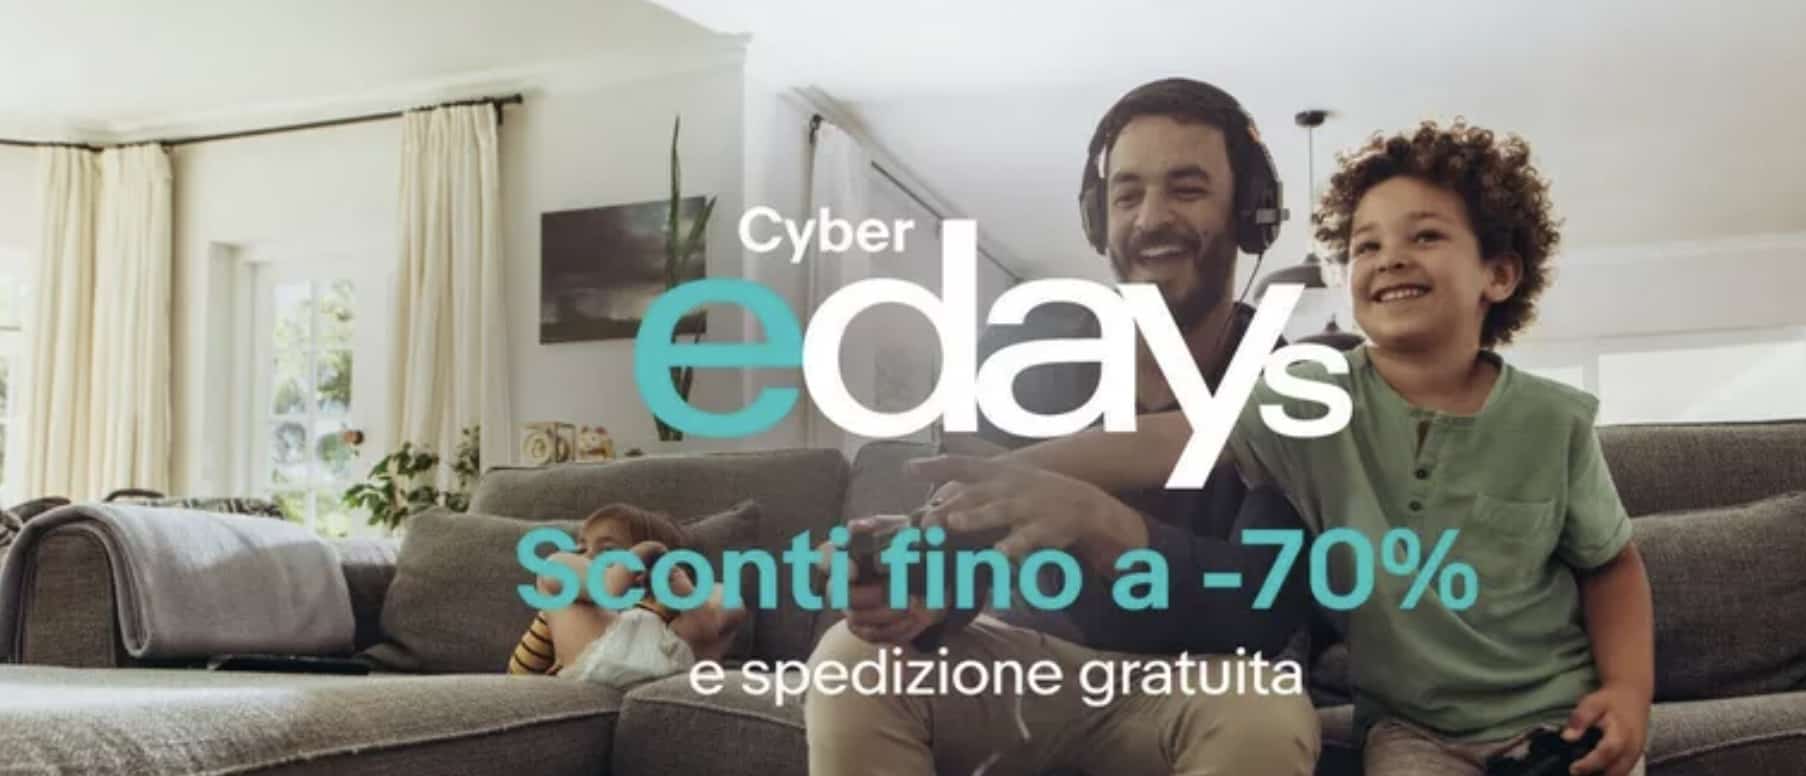 ebay cyber days